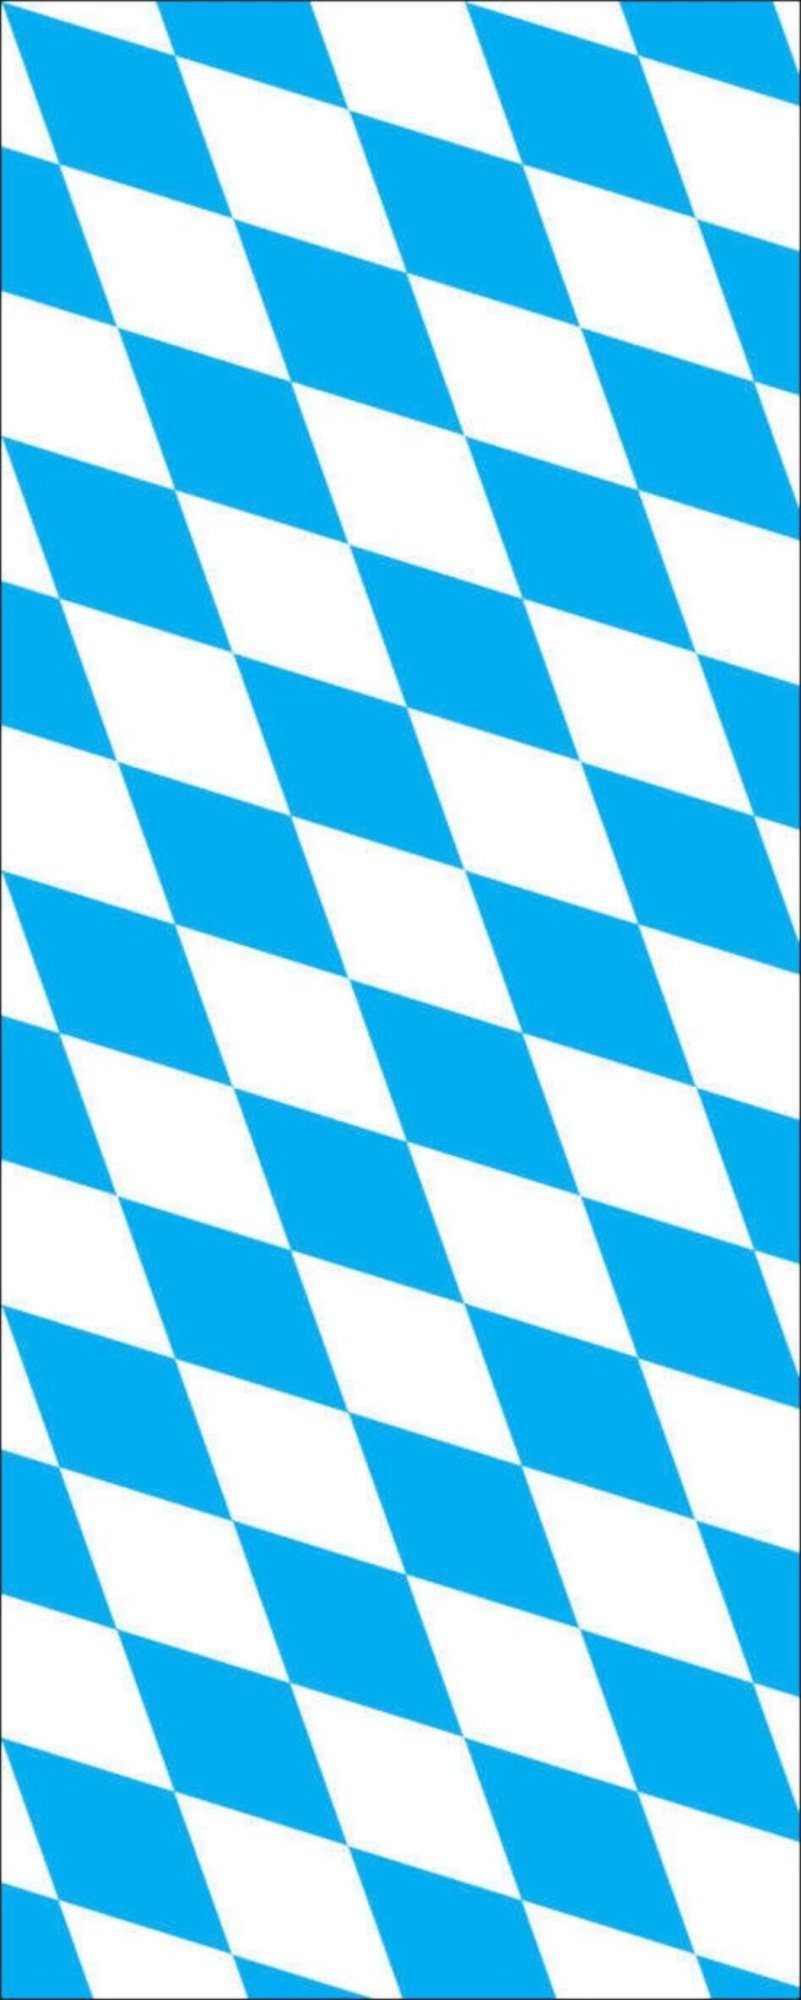 große Rauten g/m² Flagge 120 flaggenmeer Bayern Hochformat